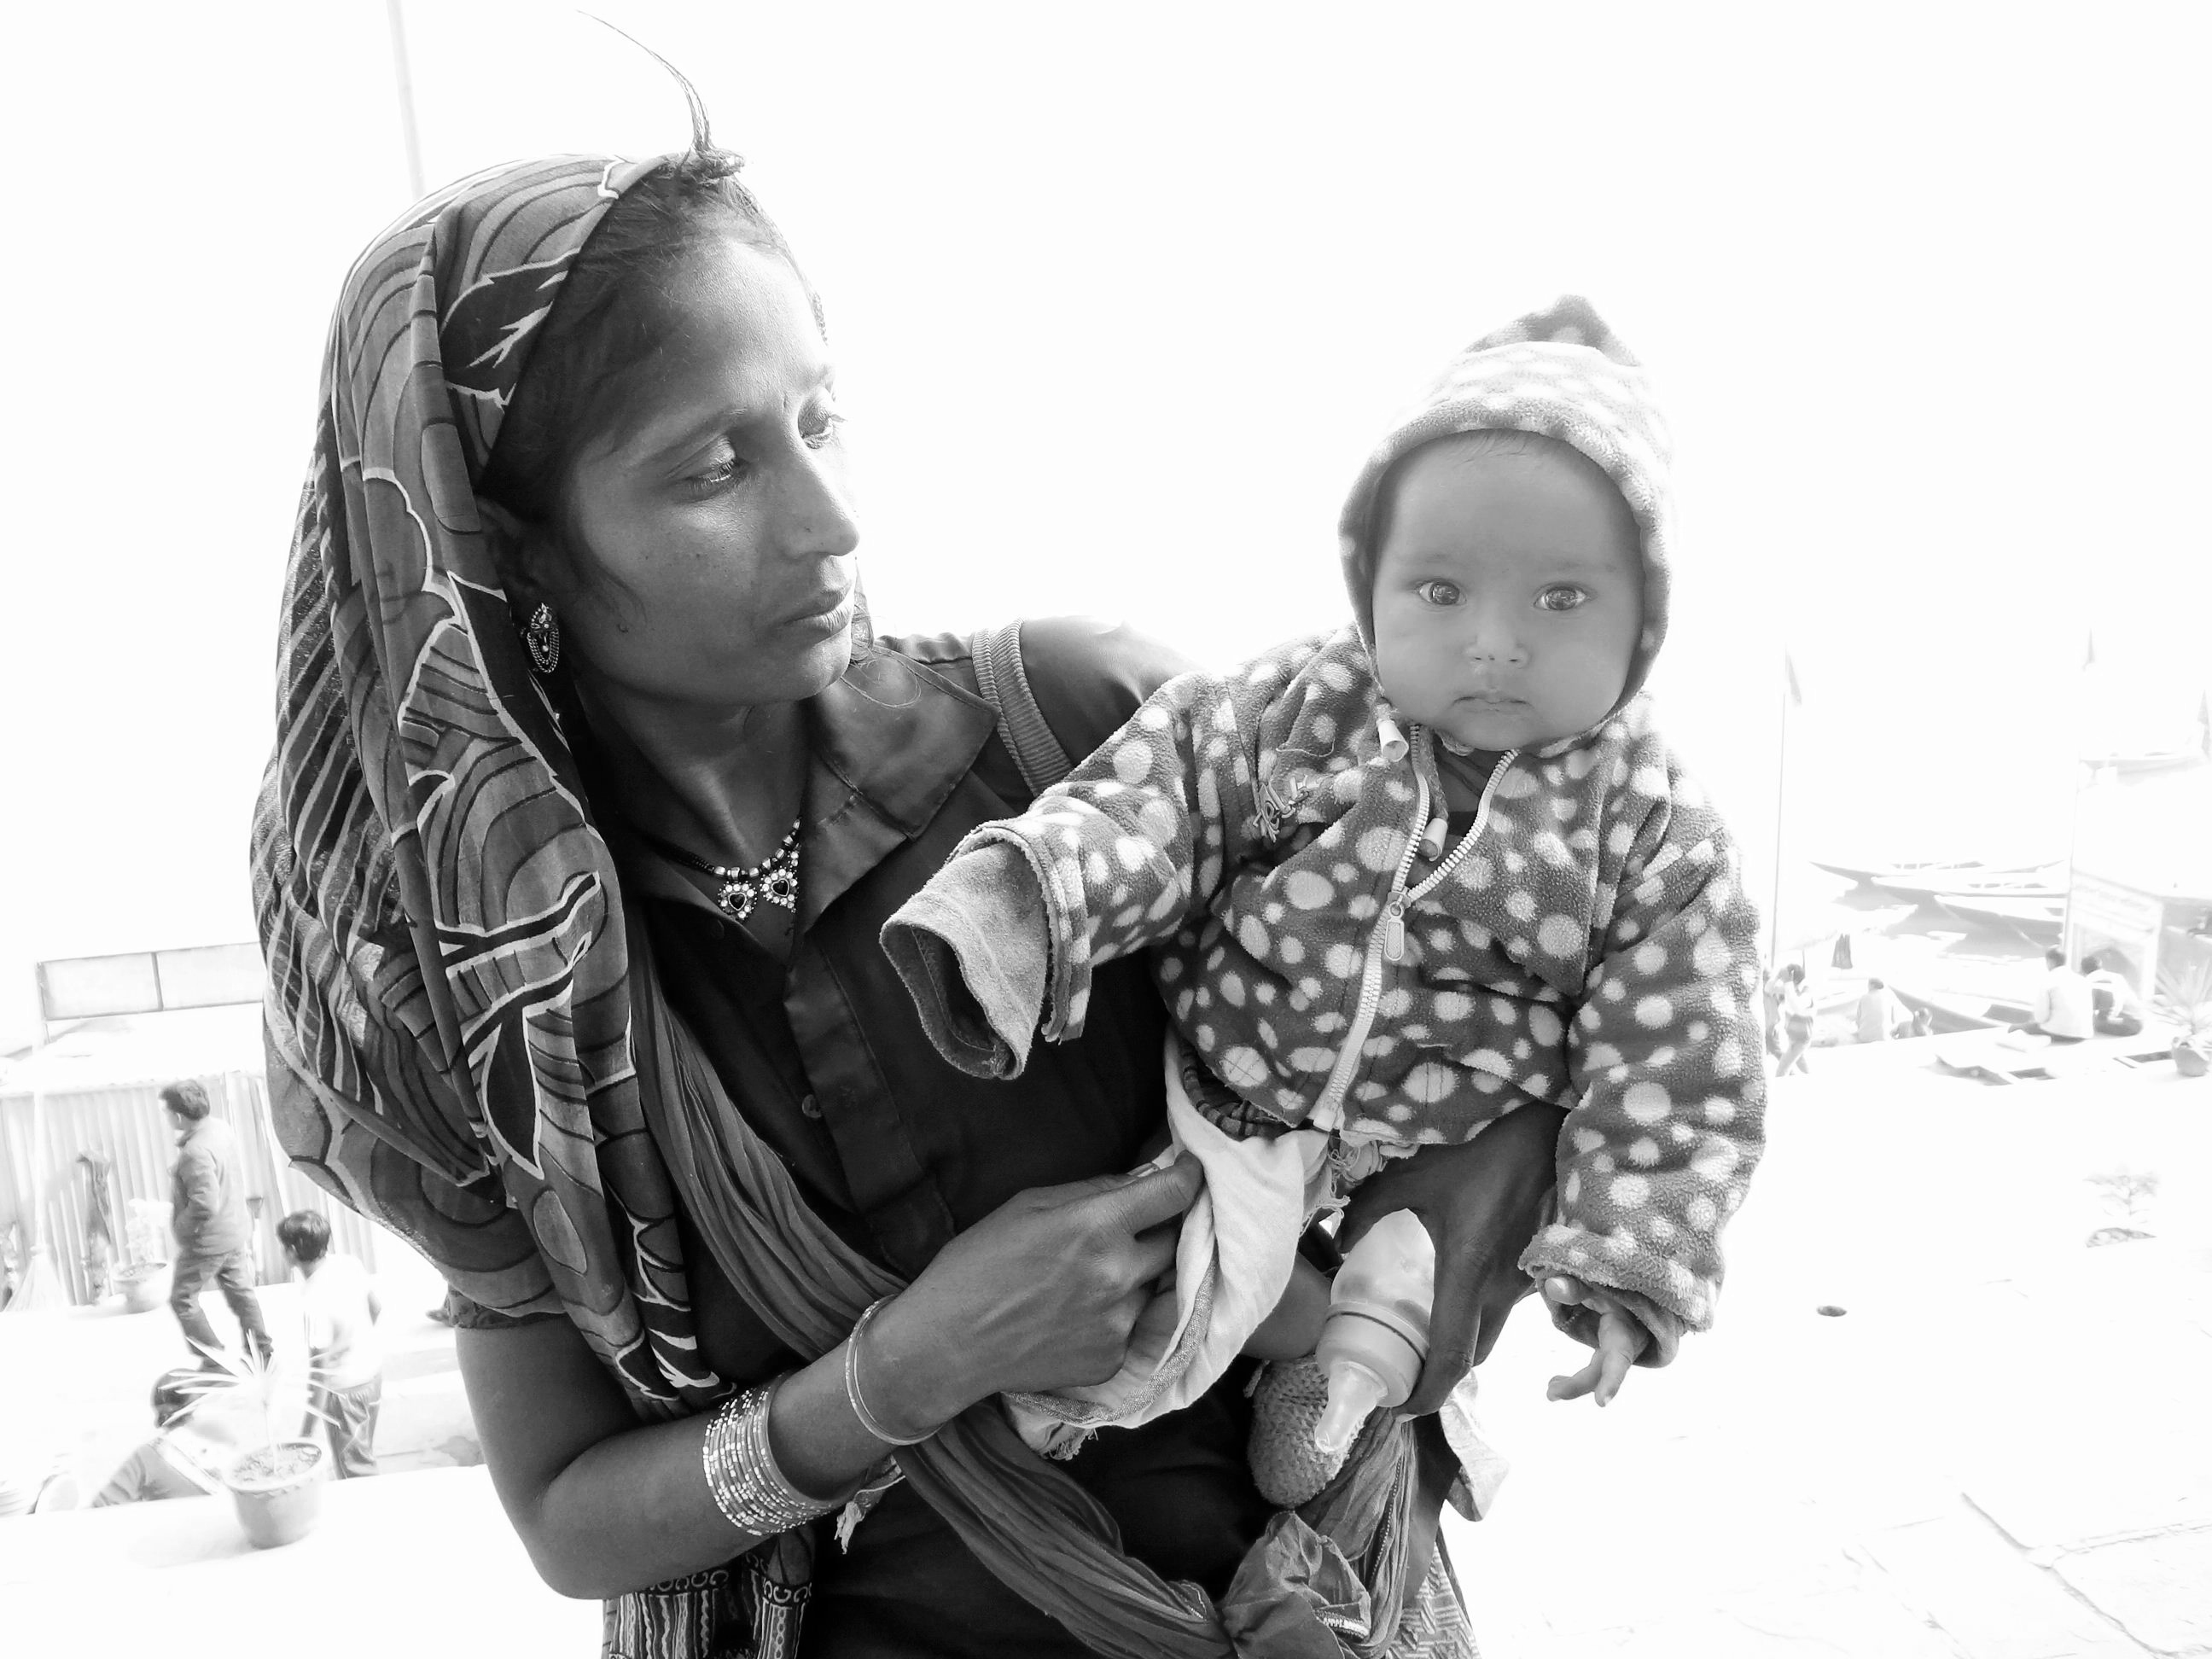 "My baby is starving" Varanasi, India